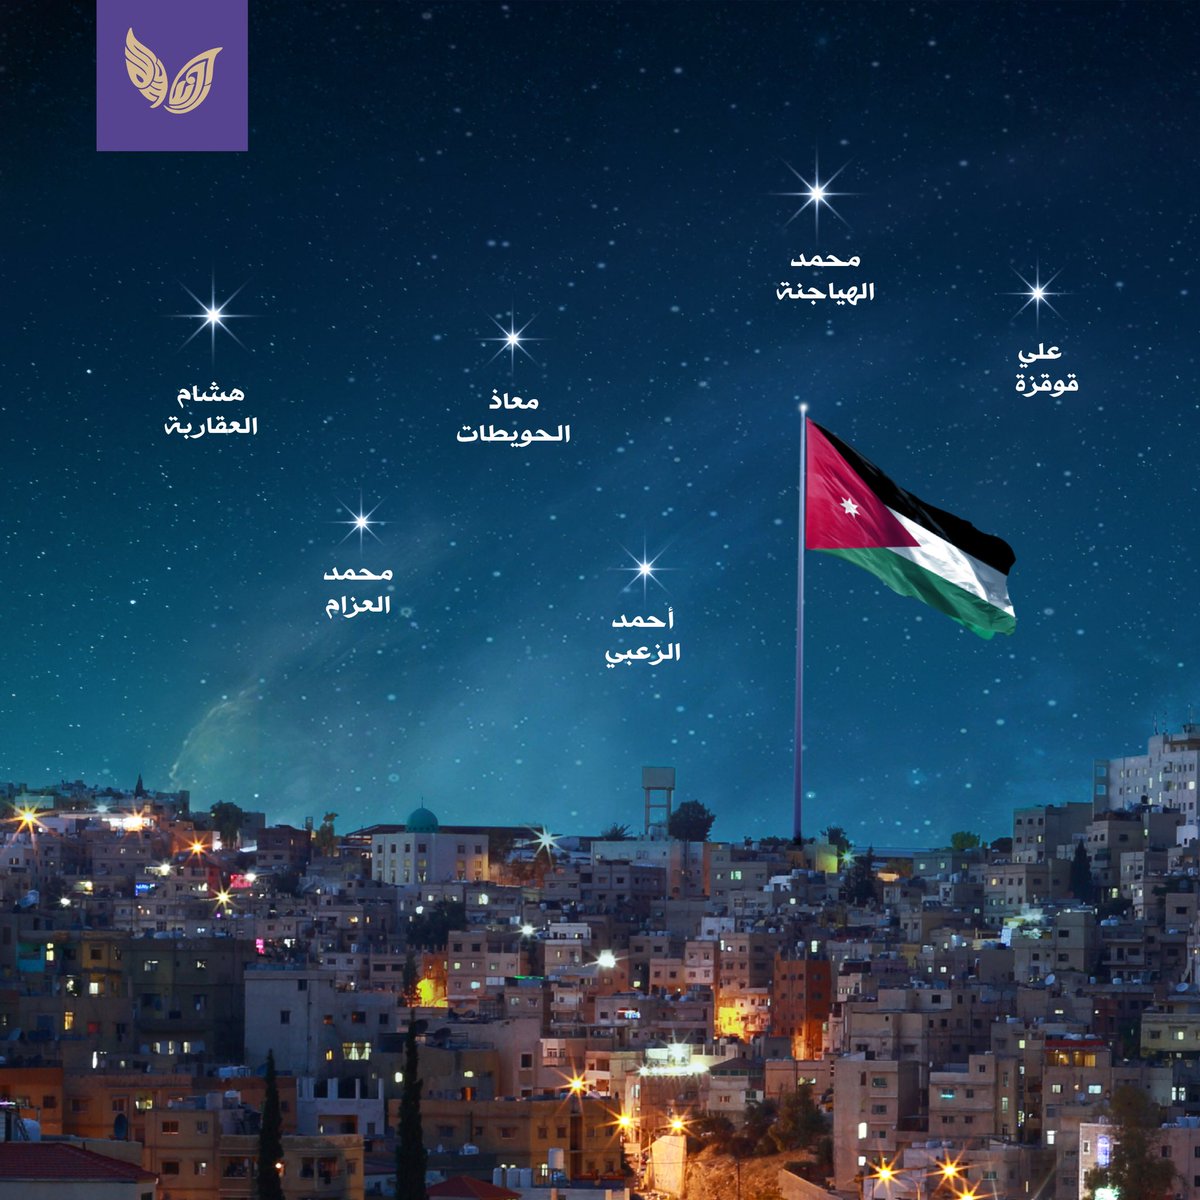 كل عام والأردن بخير وسلام #عيد_الأضحى
Wishing our #Jordan peace and blessings this Eid 